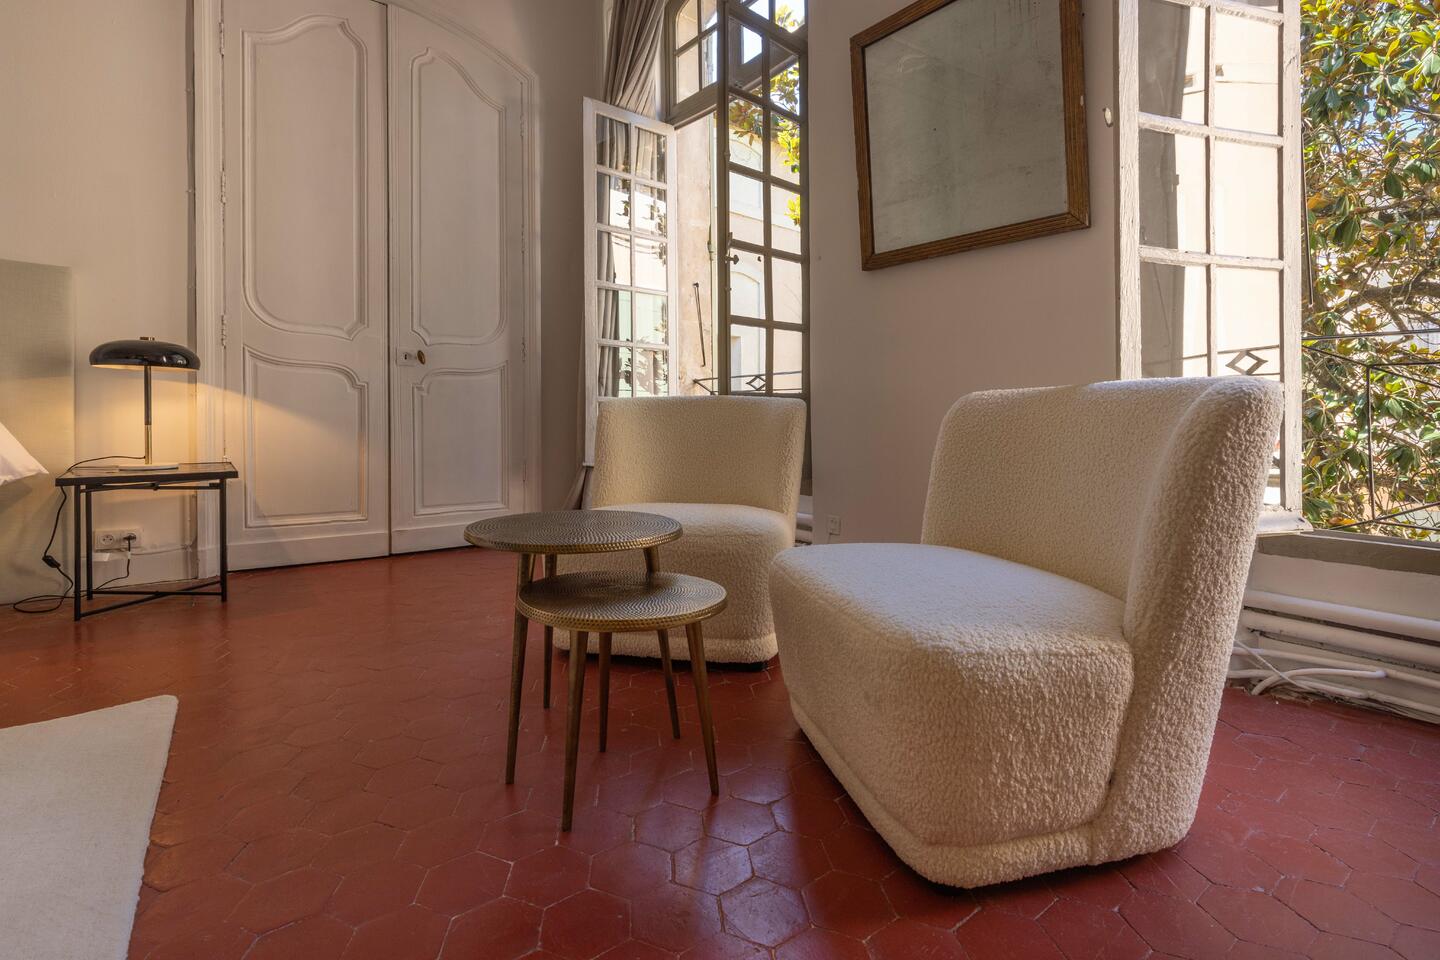 43 - Cloître Jean Roux: Villa: Interior